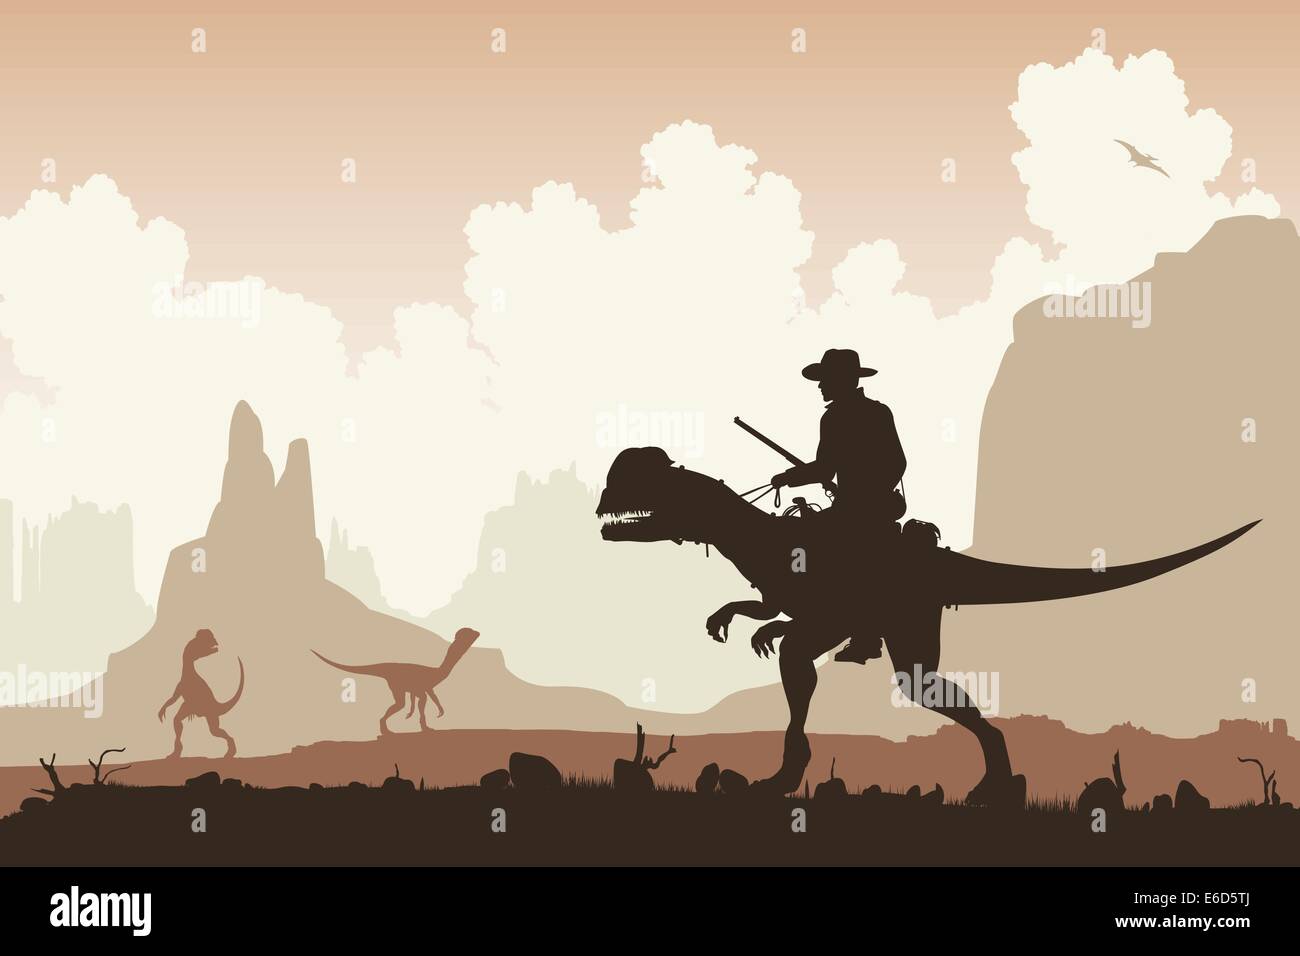 Editable vector illustration of a cowboy riding a Dilophosaurus dinosaur in a primeval landscape Stock Vector